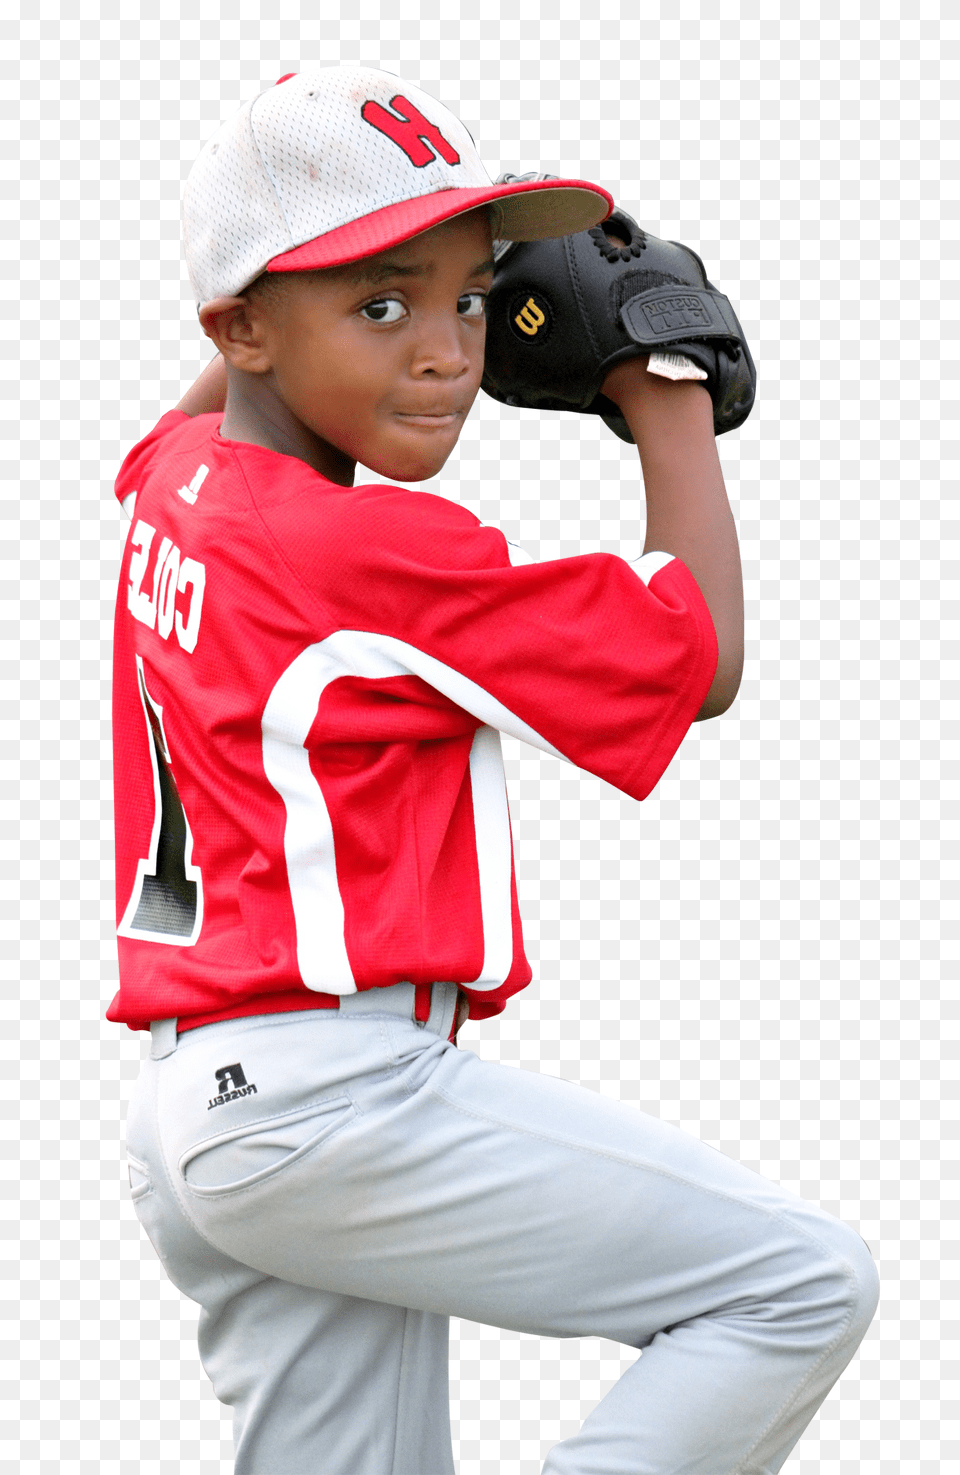 Pngpix Com Baseball Player Image, Team Sport, Hat, Glove, People Free Transparent Png